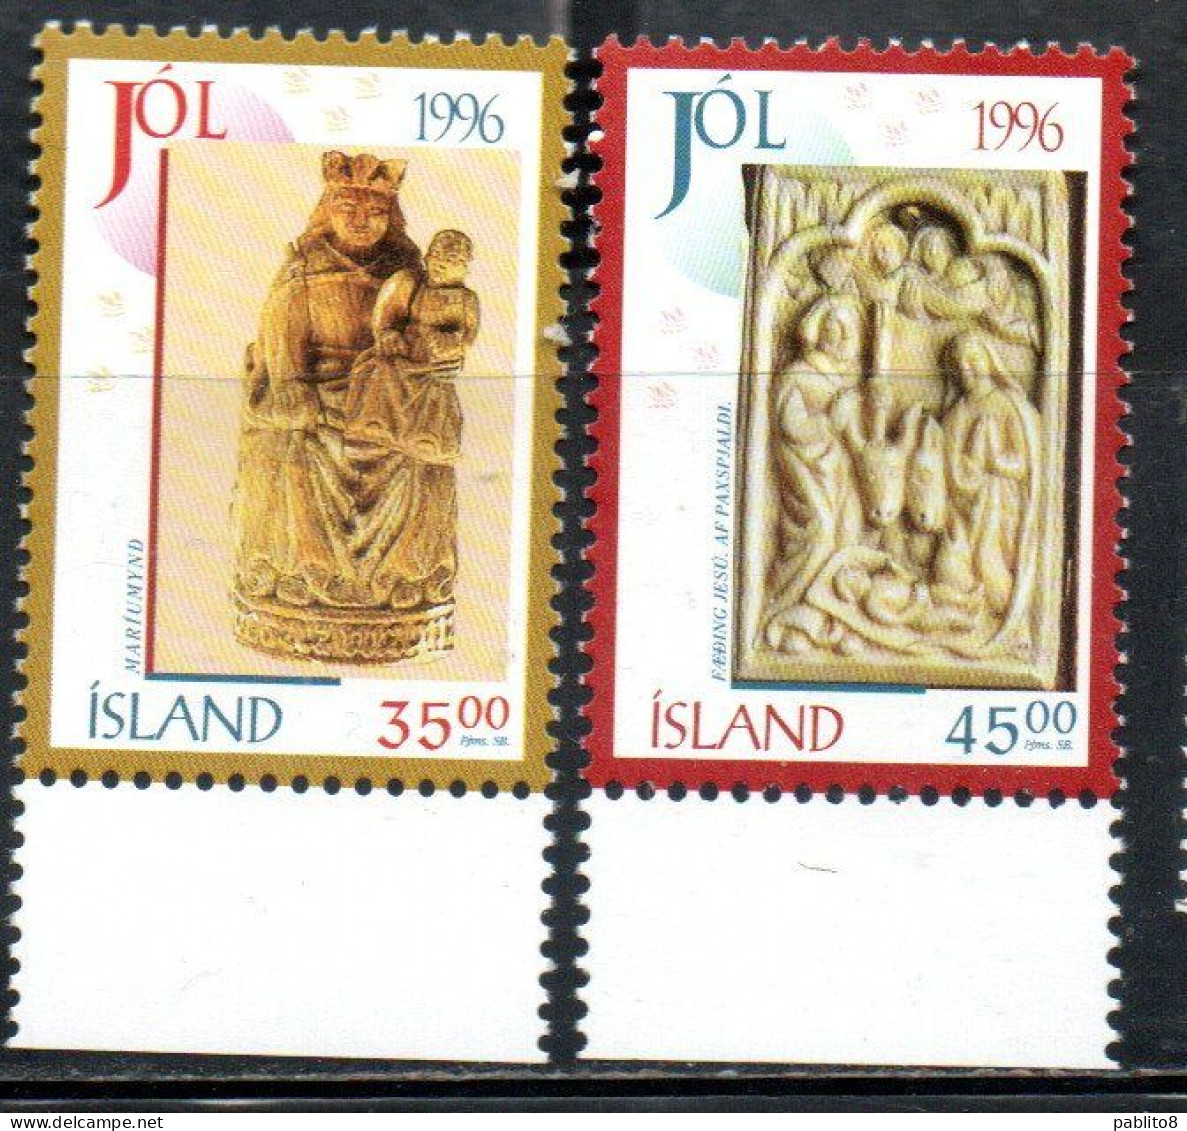 ISLANDA ICELAND ISLANDE 1996 CHRISTMAS NATALE NOEL WEIHNACHTEN NAVIDAD JOL COMPLETE SET SERIE COMPLETA MNH - Ungebraucht